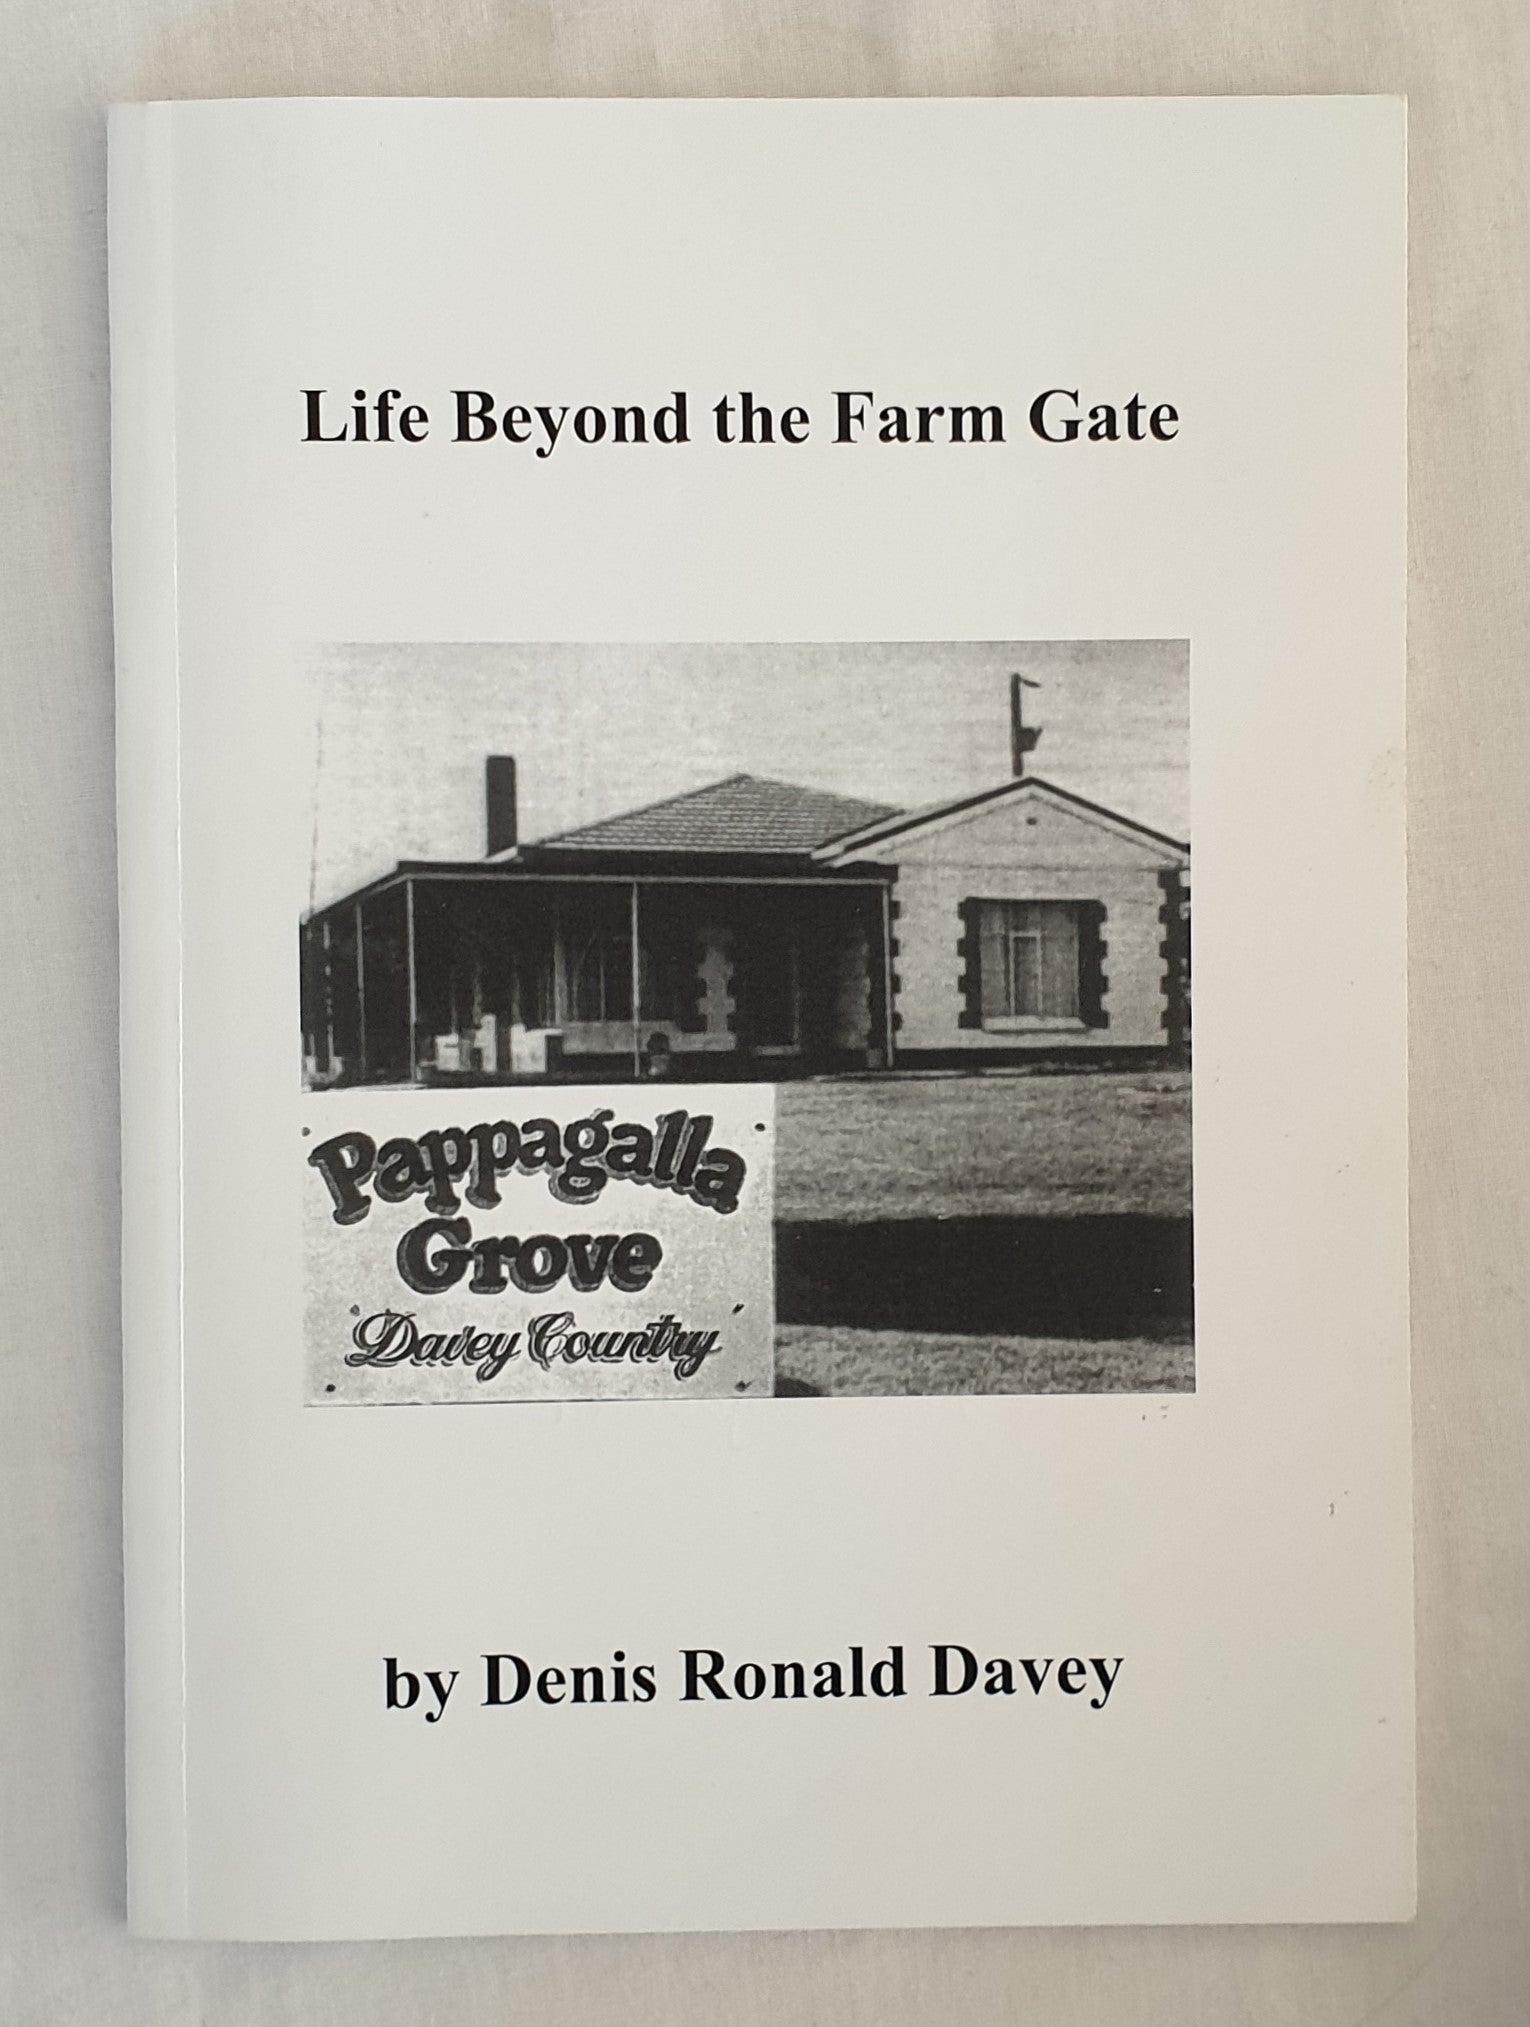 Life Beyond the Farm Gate by Denis Ronald Davey